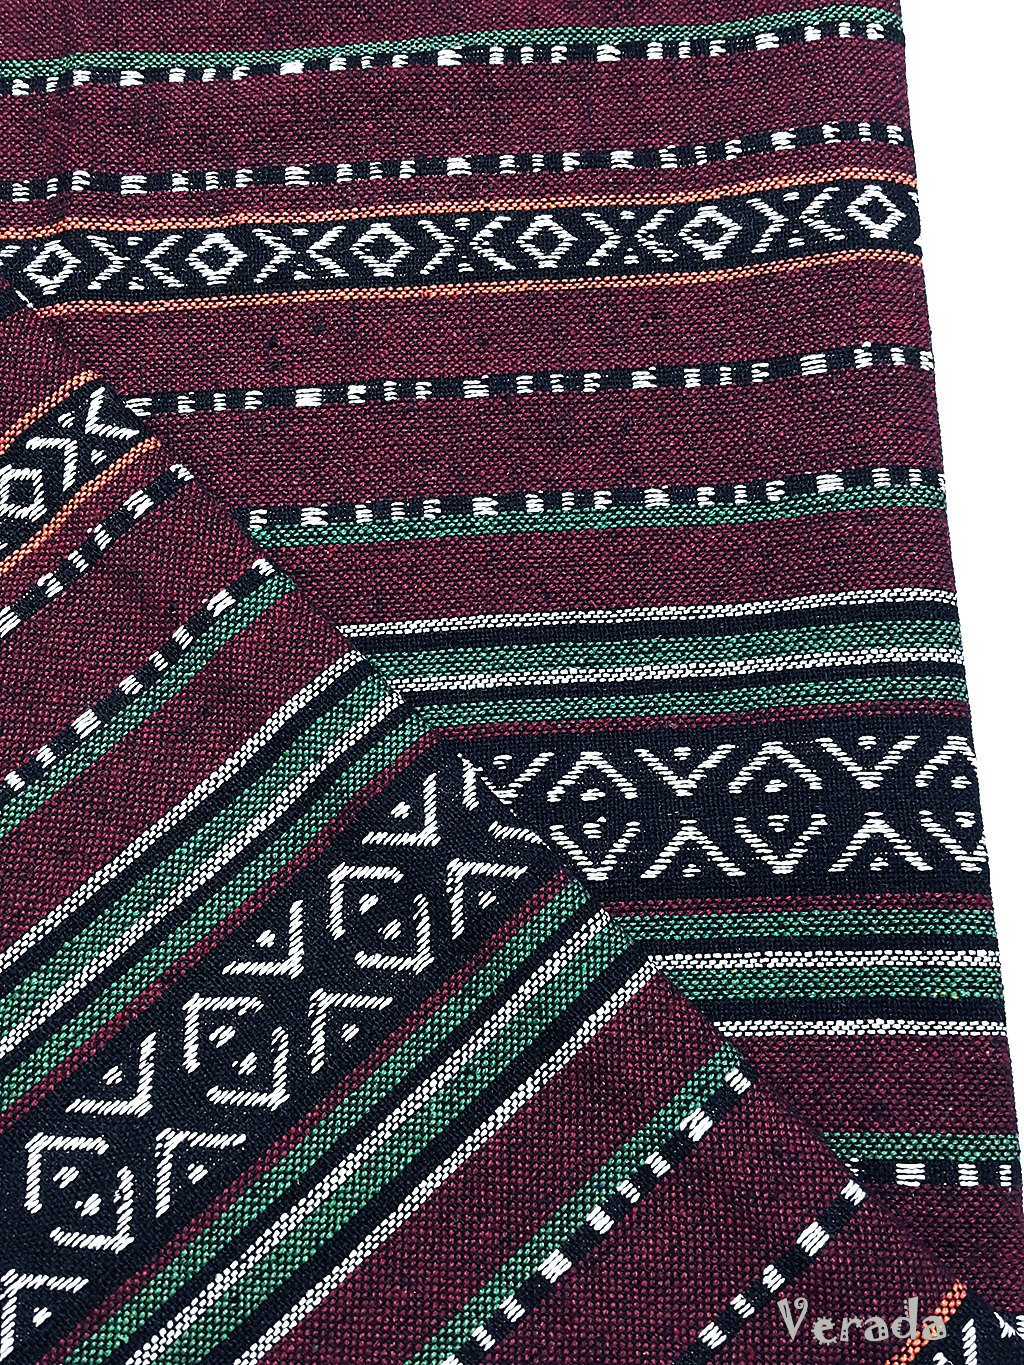 Thai Woven Cotton Tribal Fabric Textile 1/2 yard (WF109)